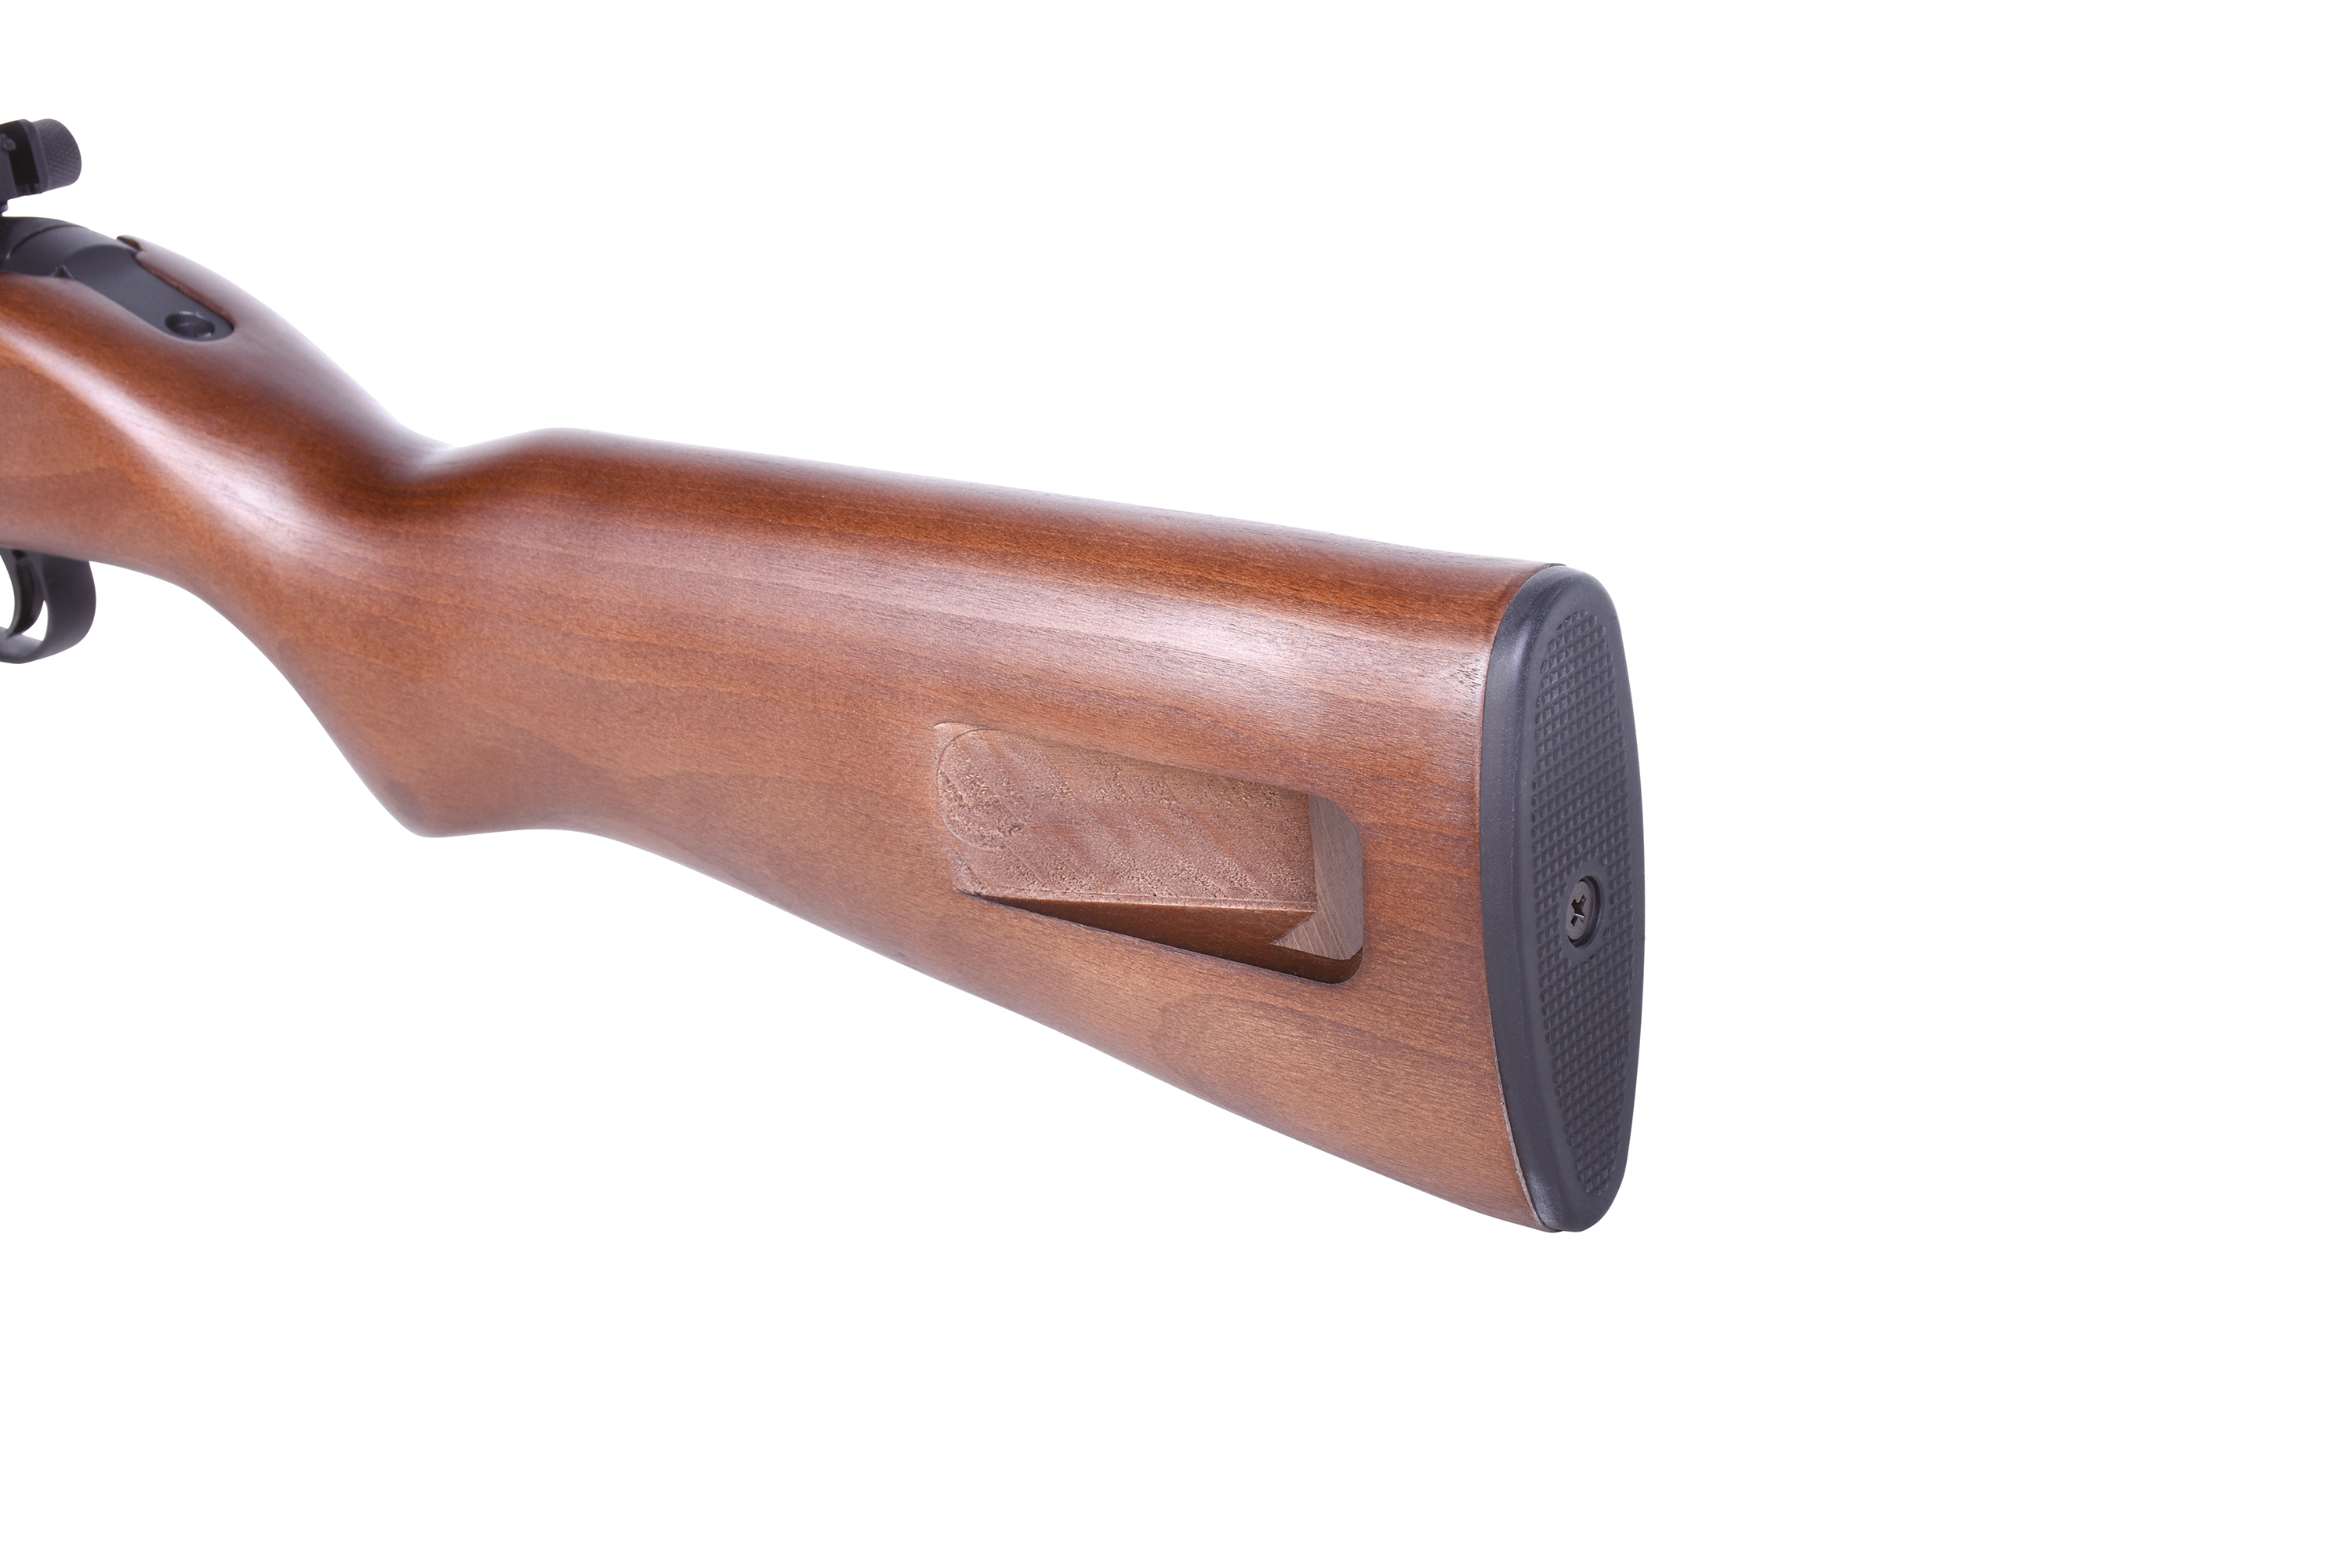 Springfield M1 Carbine Echtholz 4,5mm BB - Druckluft Co2 BlowBack